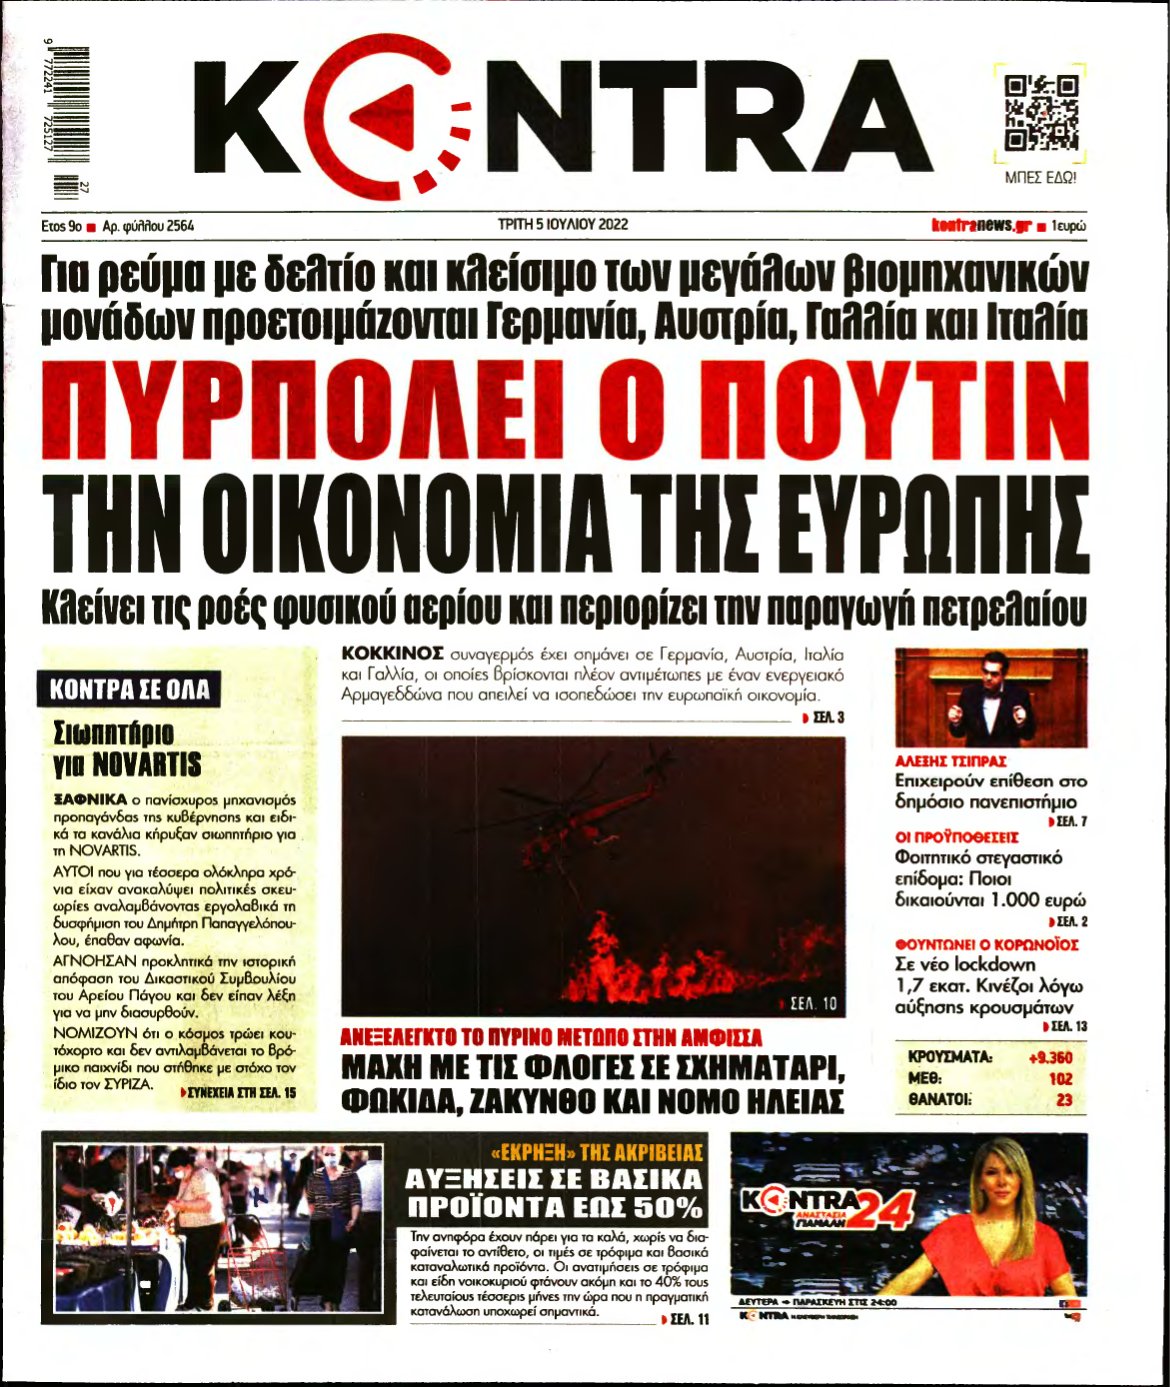 KONTRA NEWS – 05/07/2022